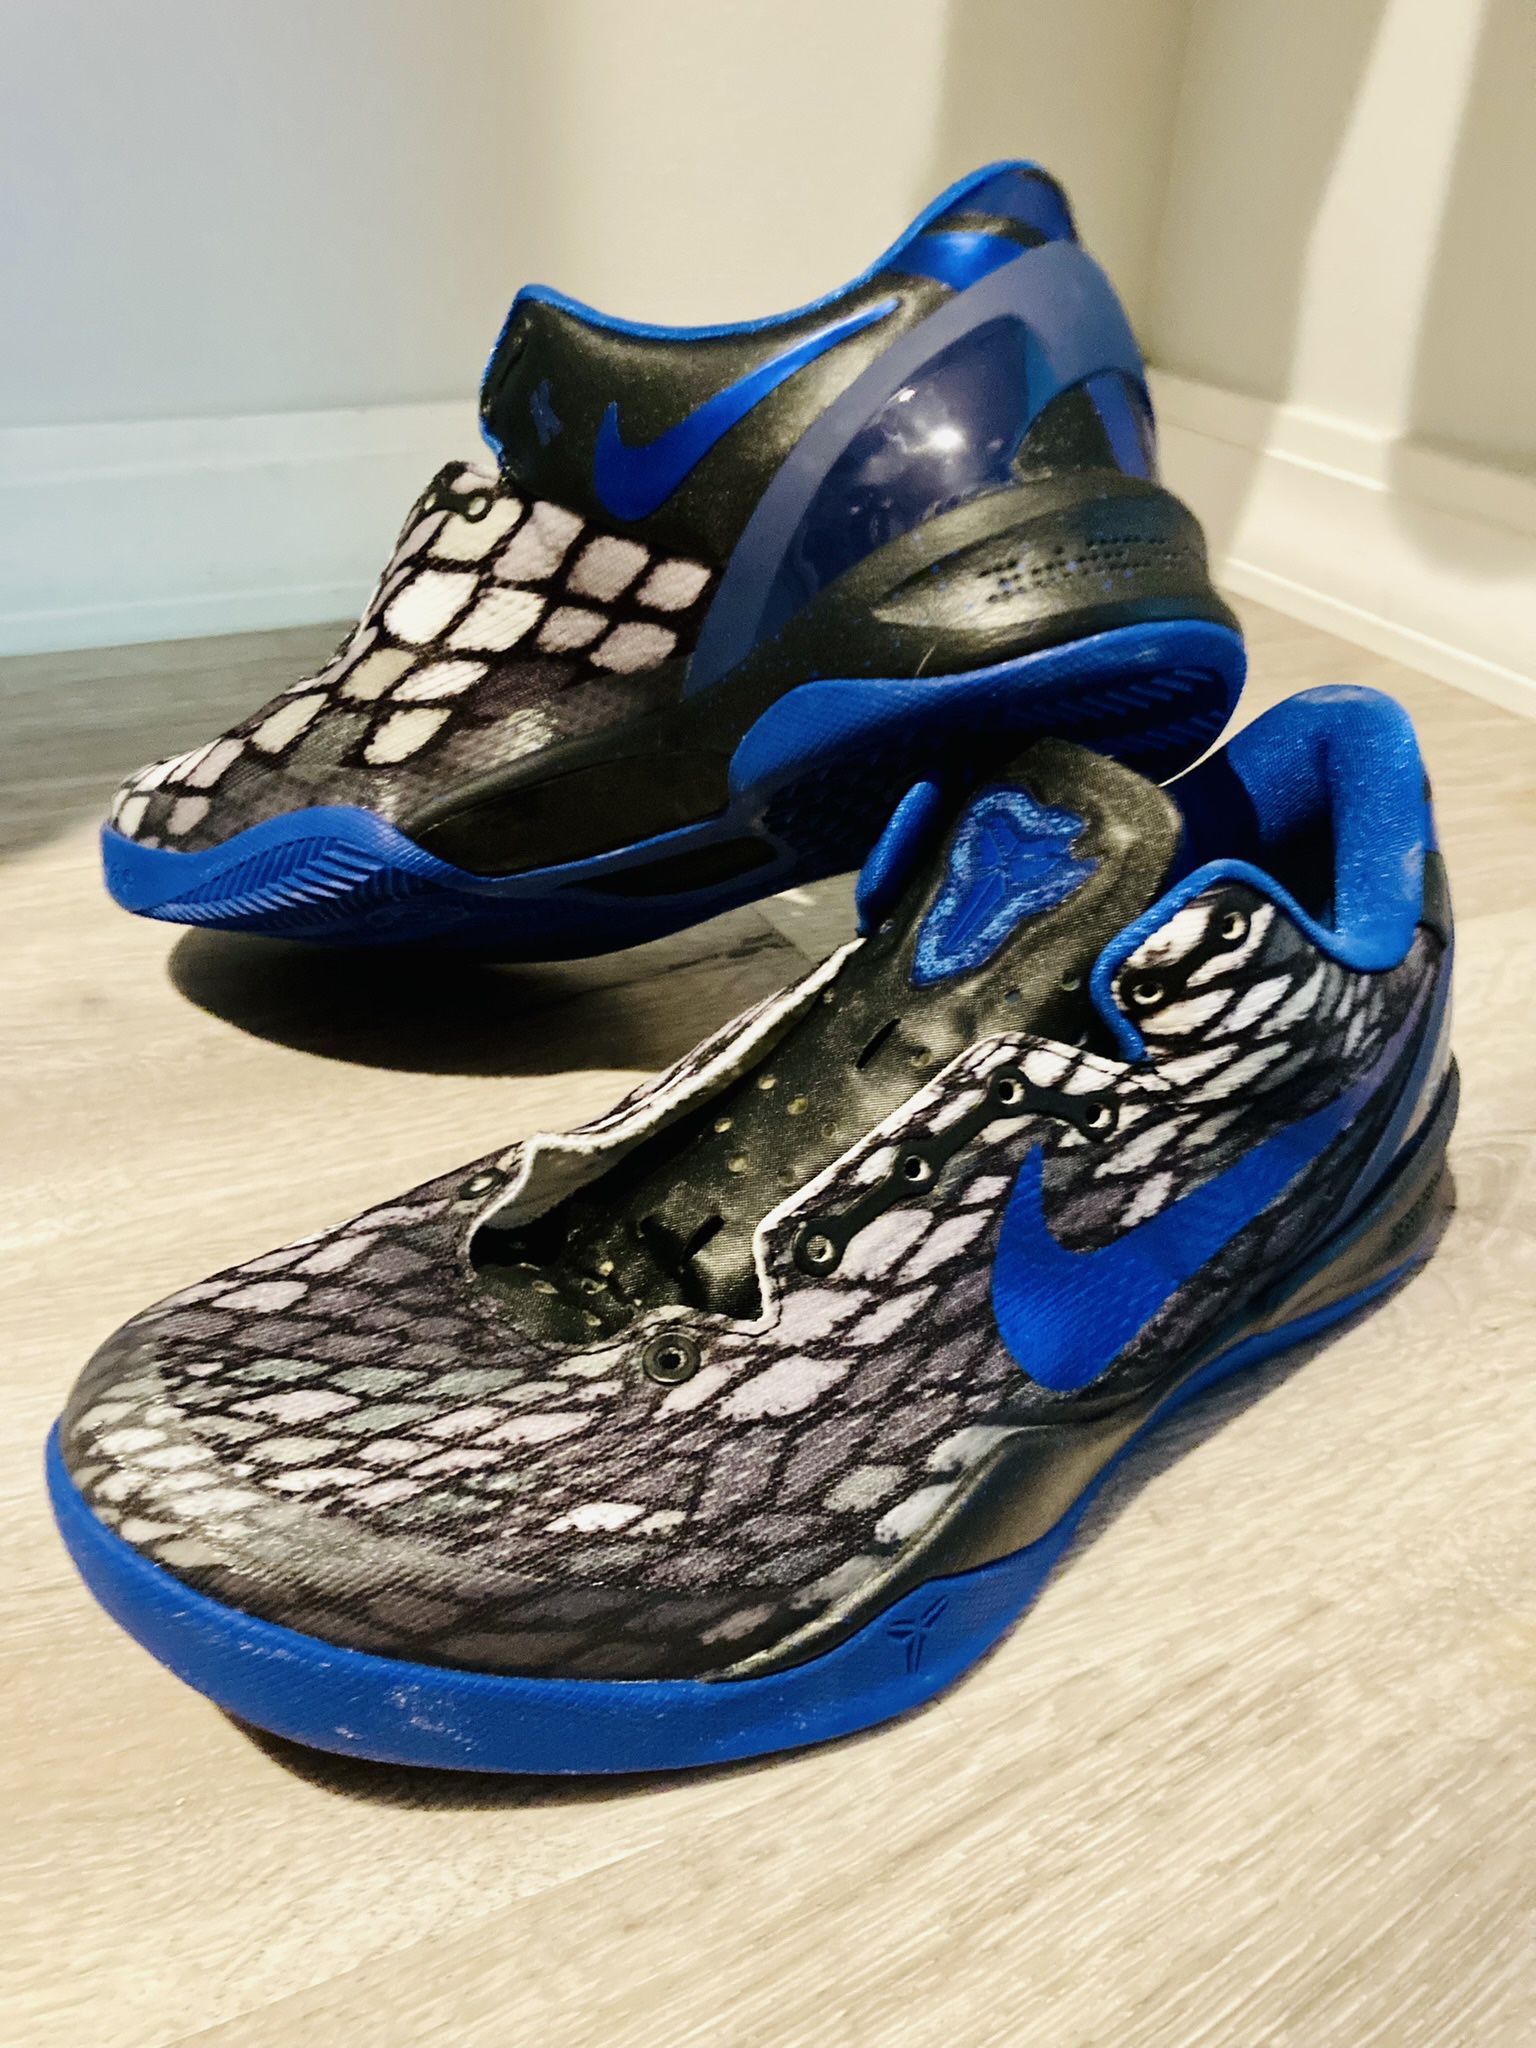 Nike Men's Sneakers - Blue - US 9